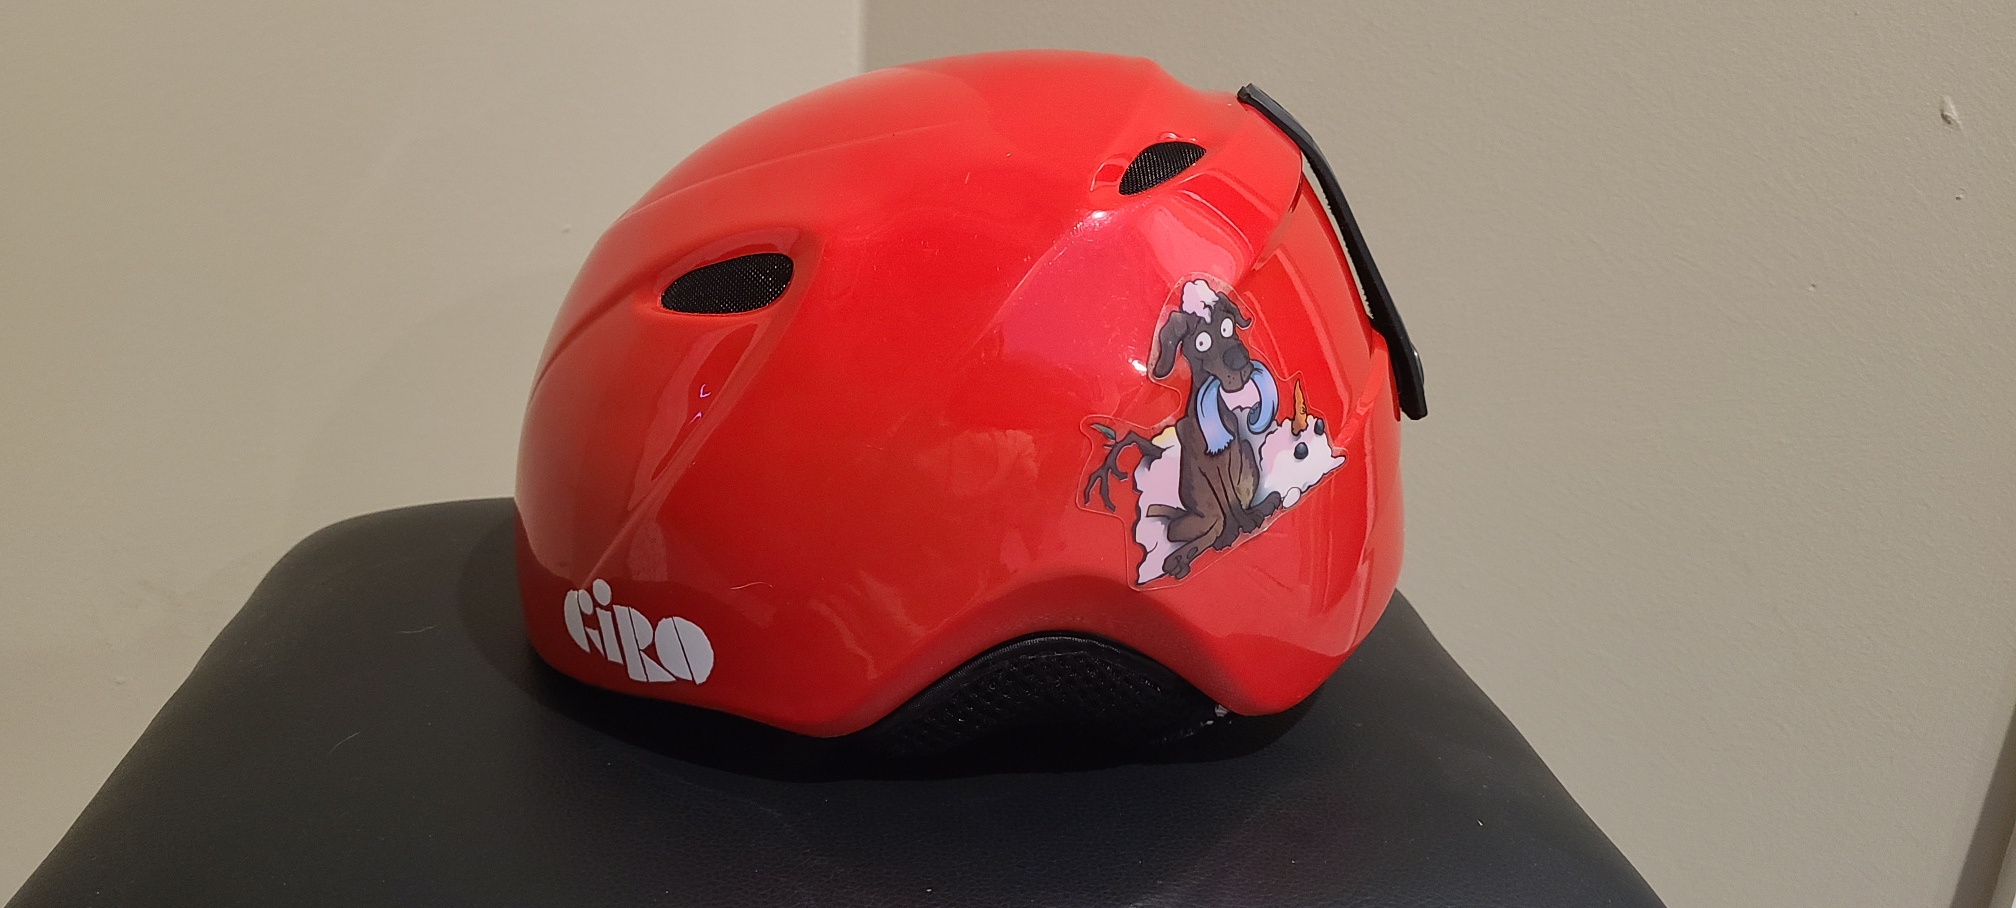 Used Extra Small / Small Giro Slingshot Helmet